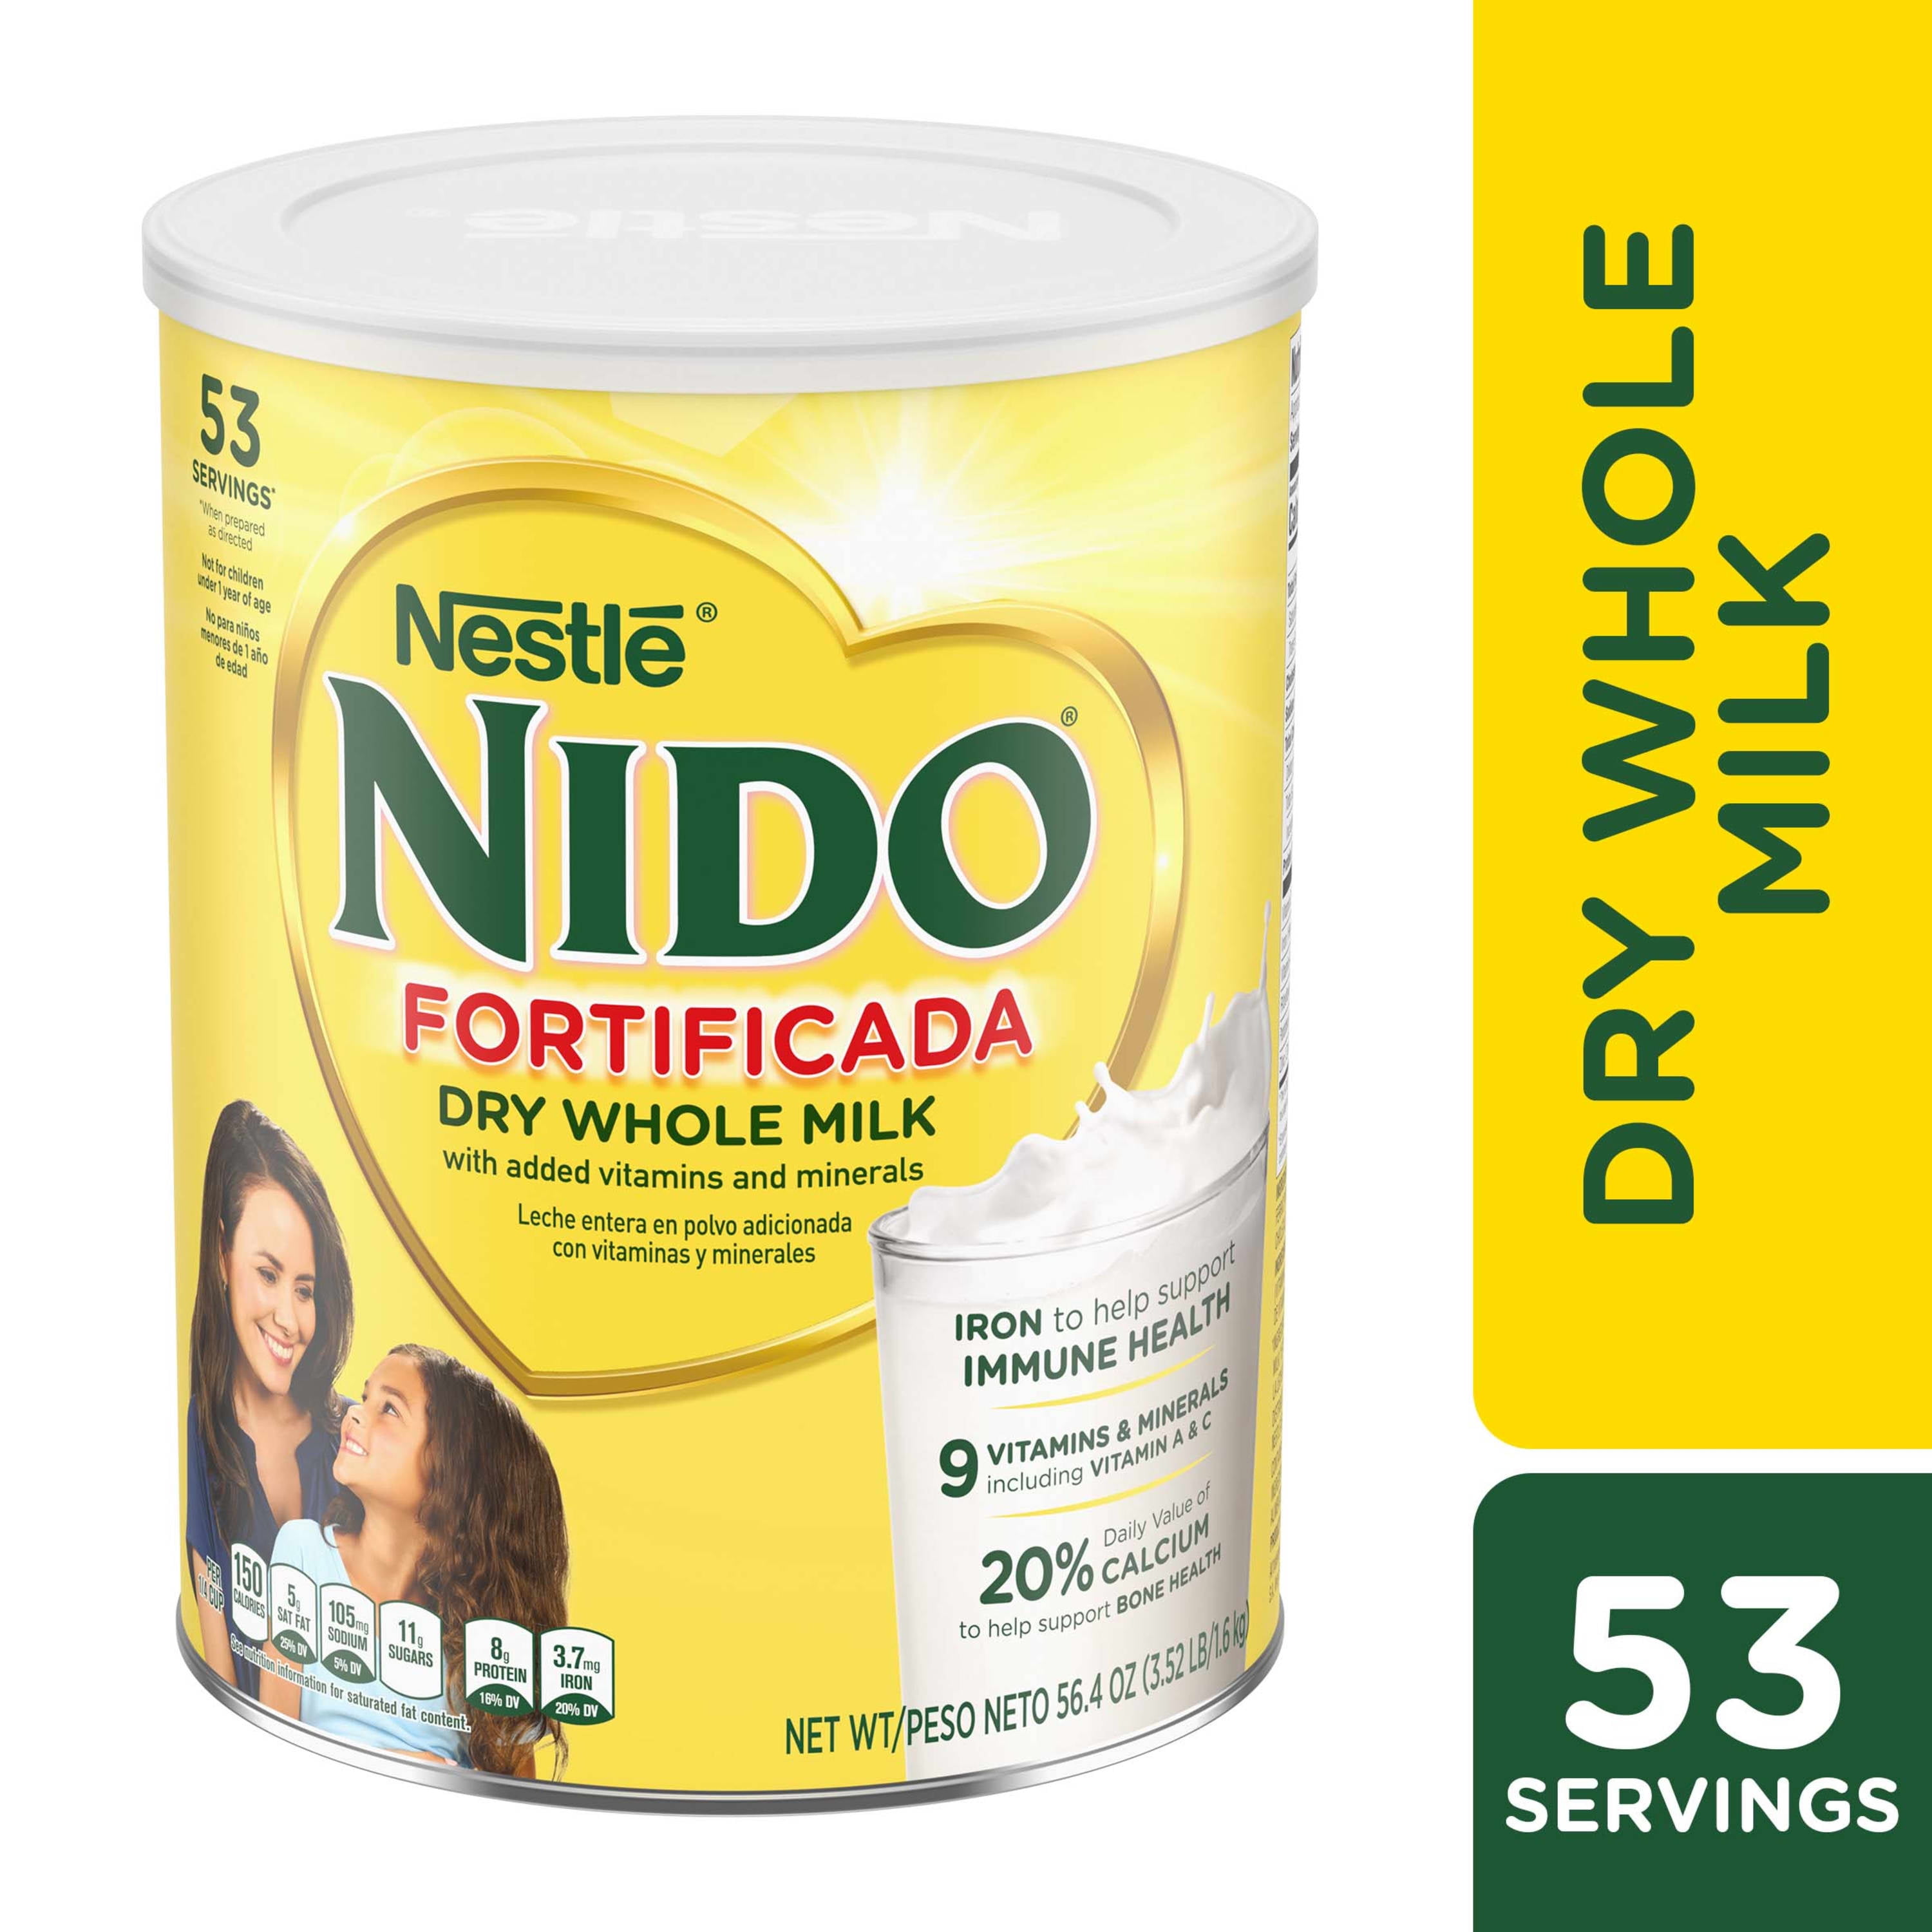 Nestle Nido Fortificada Powdered Drink Mix, Dry Whole Milk Powder, 56.4 oz